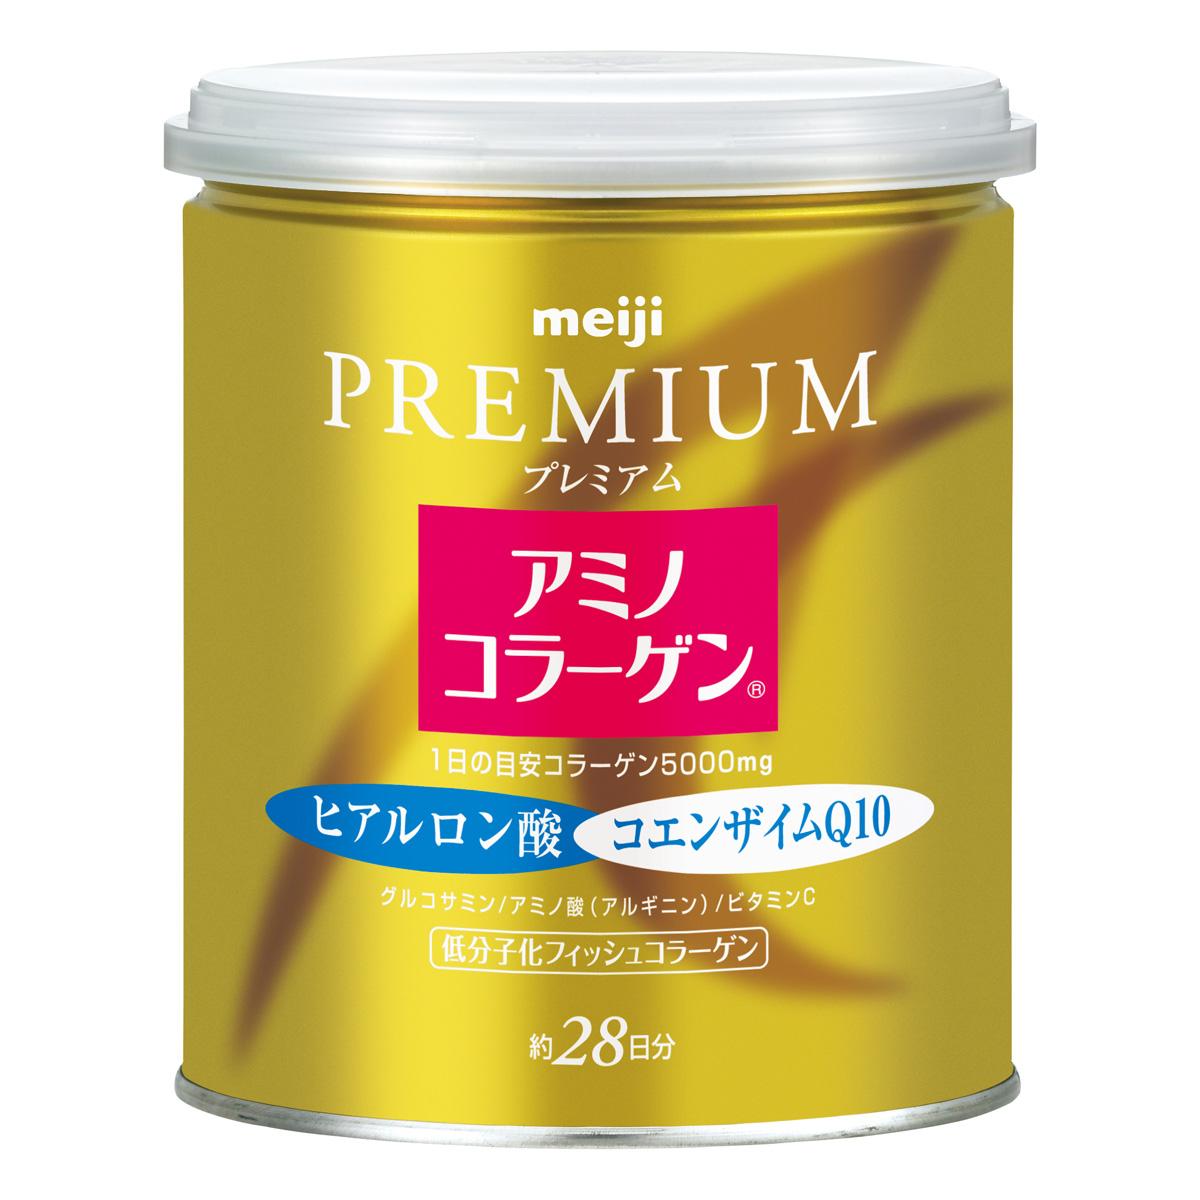 Meiji Amino Collagen Premium + Hyaluronic Acid + Co Q10 แบบกระป๋อง (Can) 200 กรัม / ทานได้ 28 วัน เมจิ อะมิโนคอลลาเจน รุ่นพรีเมียม คอลลาเจนผงคุณภาพสูงจากญี่ปุ่น ให้ผิวสวยสุขภาพดียิ่งขึ้น ด้วย CoQ10 , Hyaluronic Acid ช่วยให้ผิวกระชับเต่งตึง ชุ่